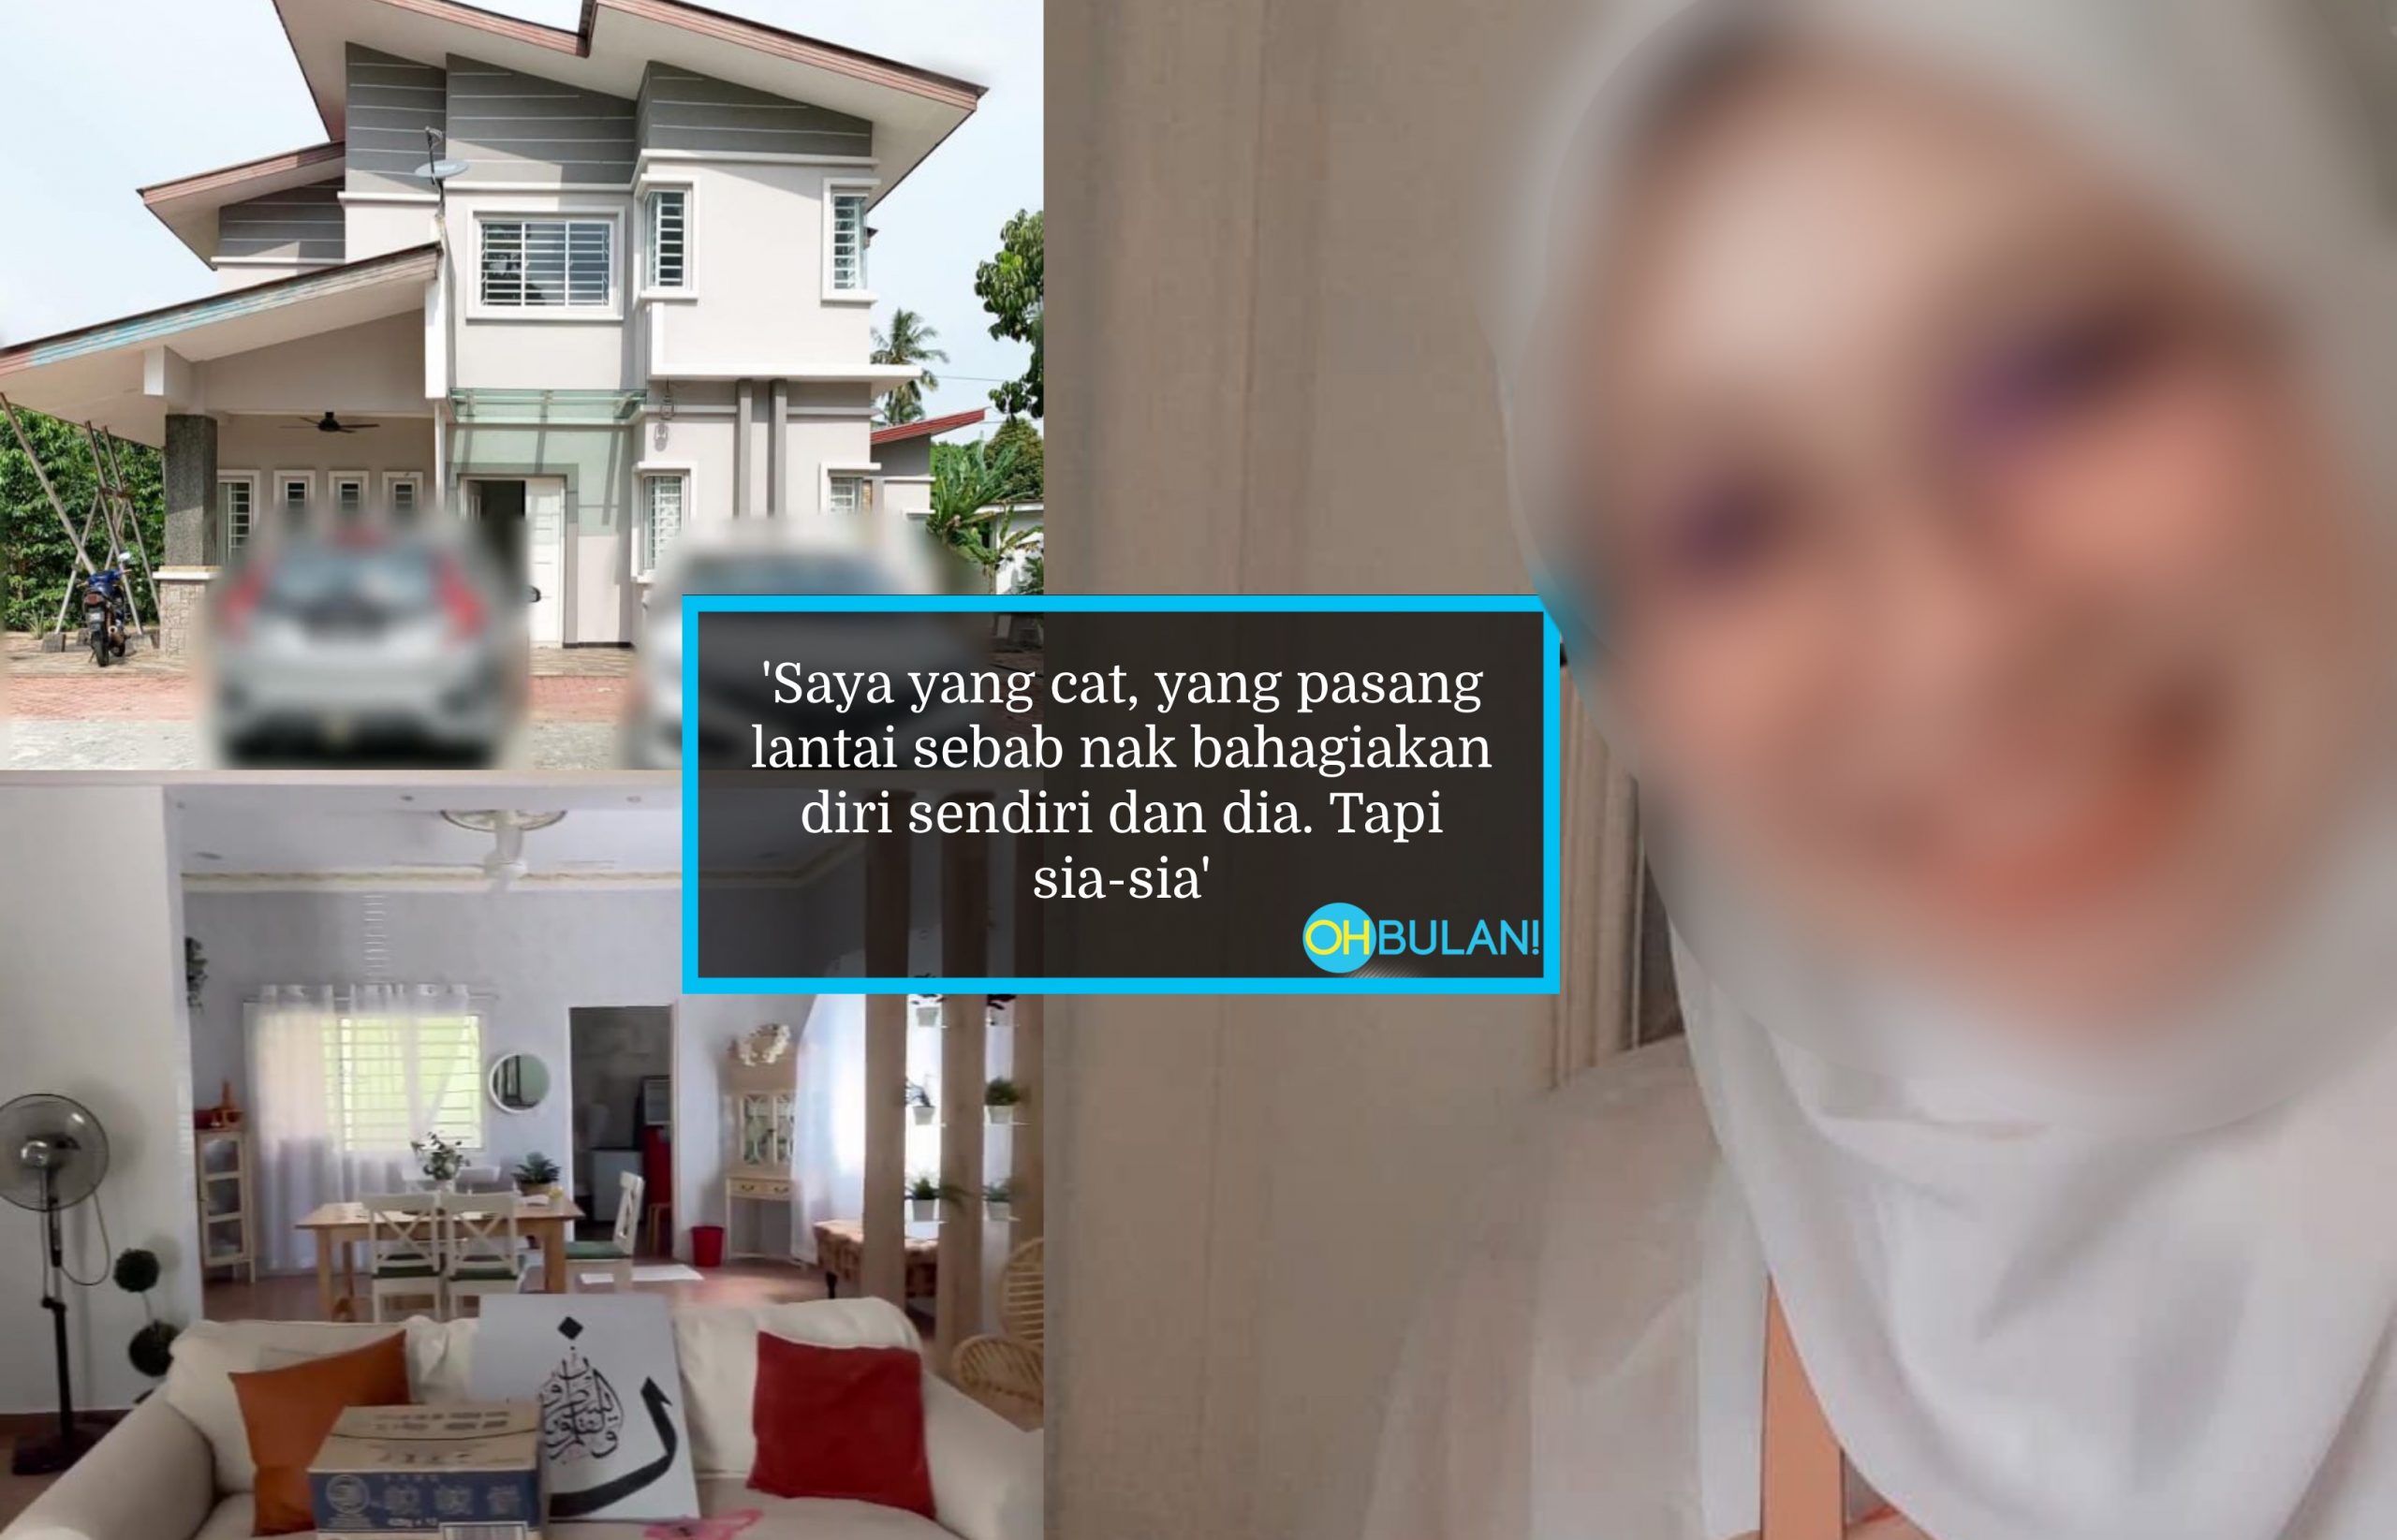 Ex Wife PU Tak Tuntut Banglo, Sempat Cat Rumah Sebelum Ditalak – ‘Yang Diharamkan Jika Awak Tinggal Dengan Si Dia’